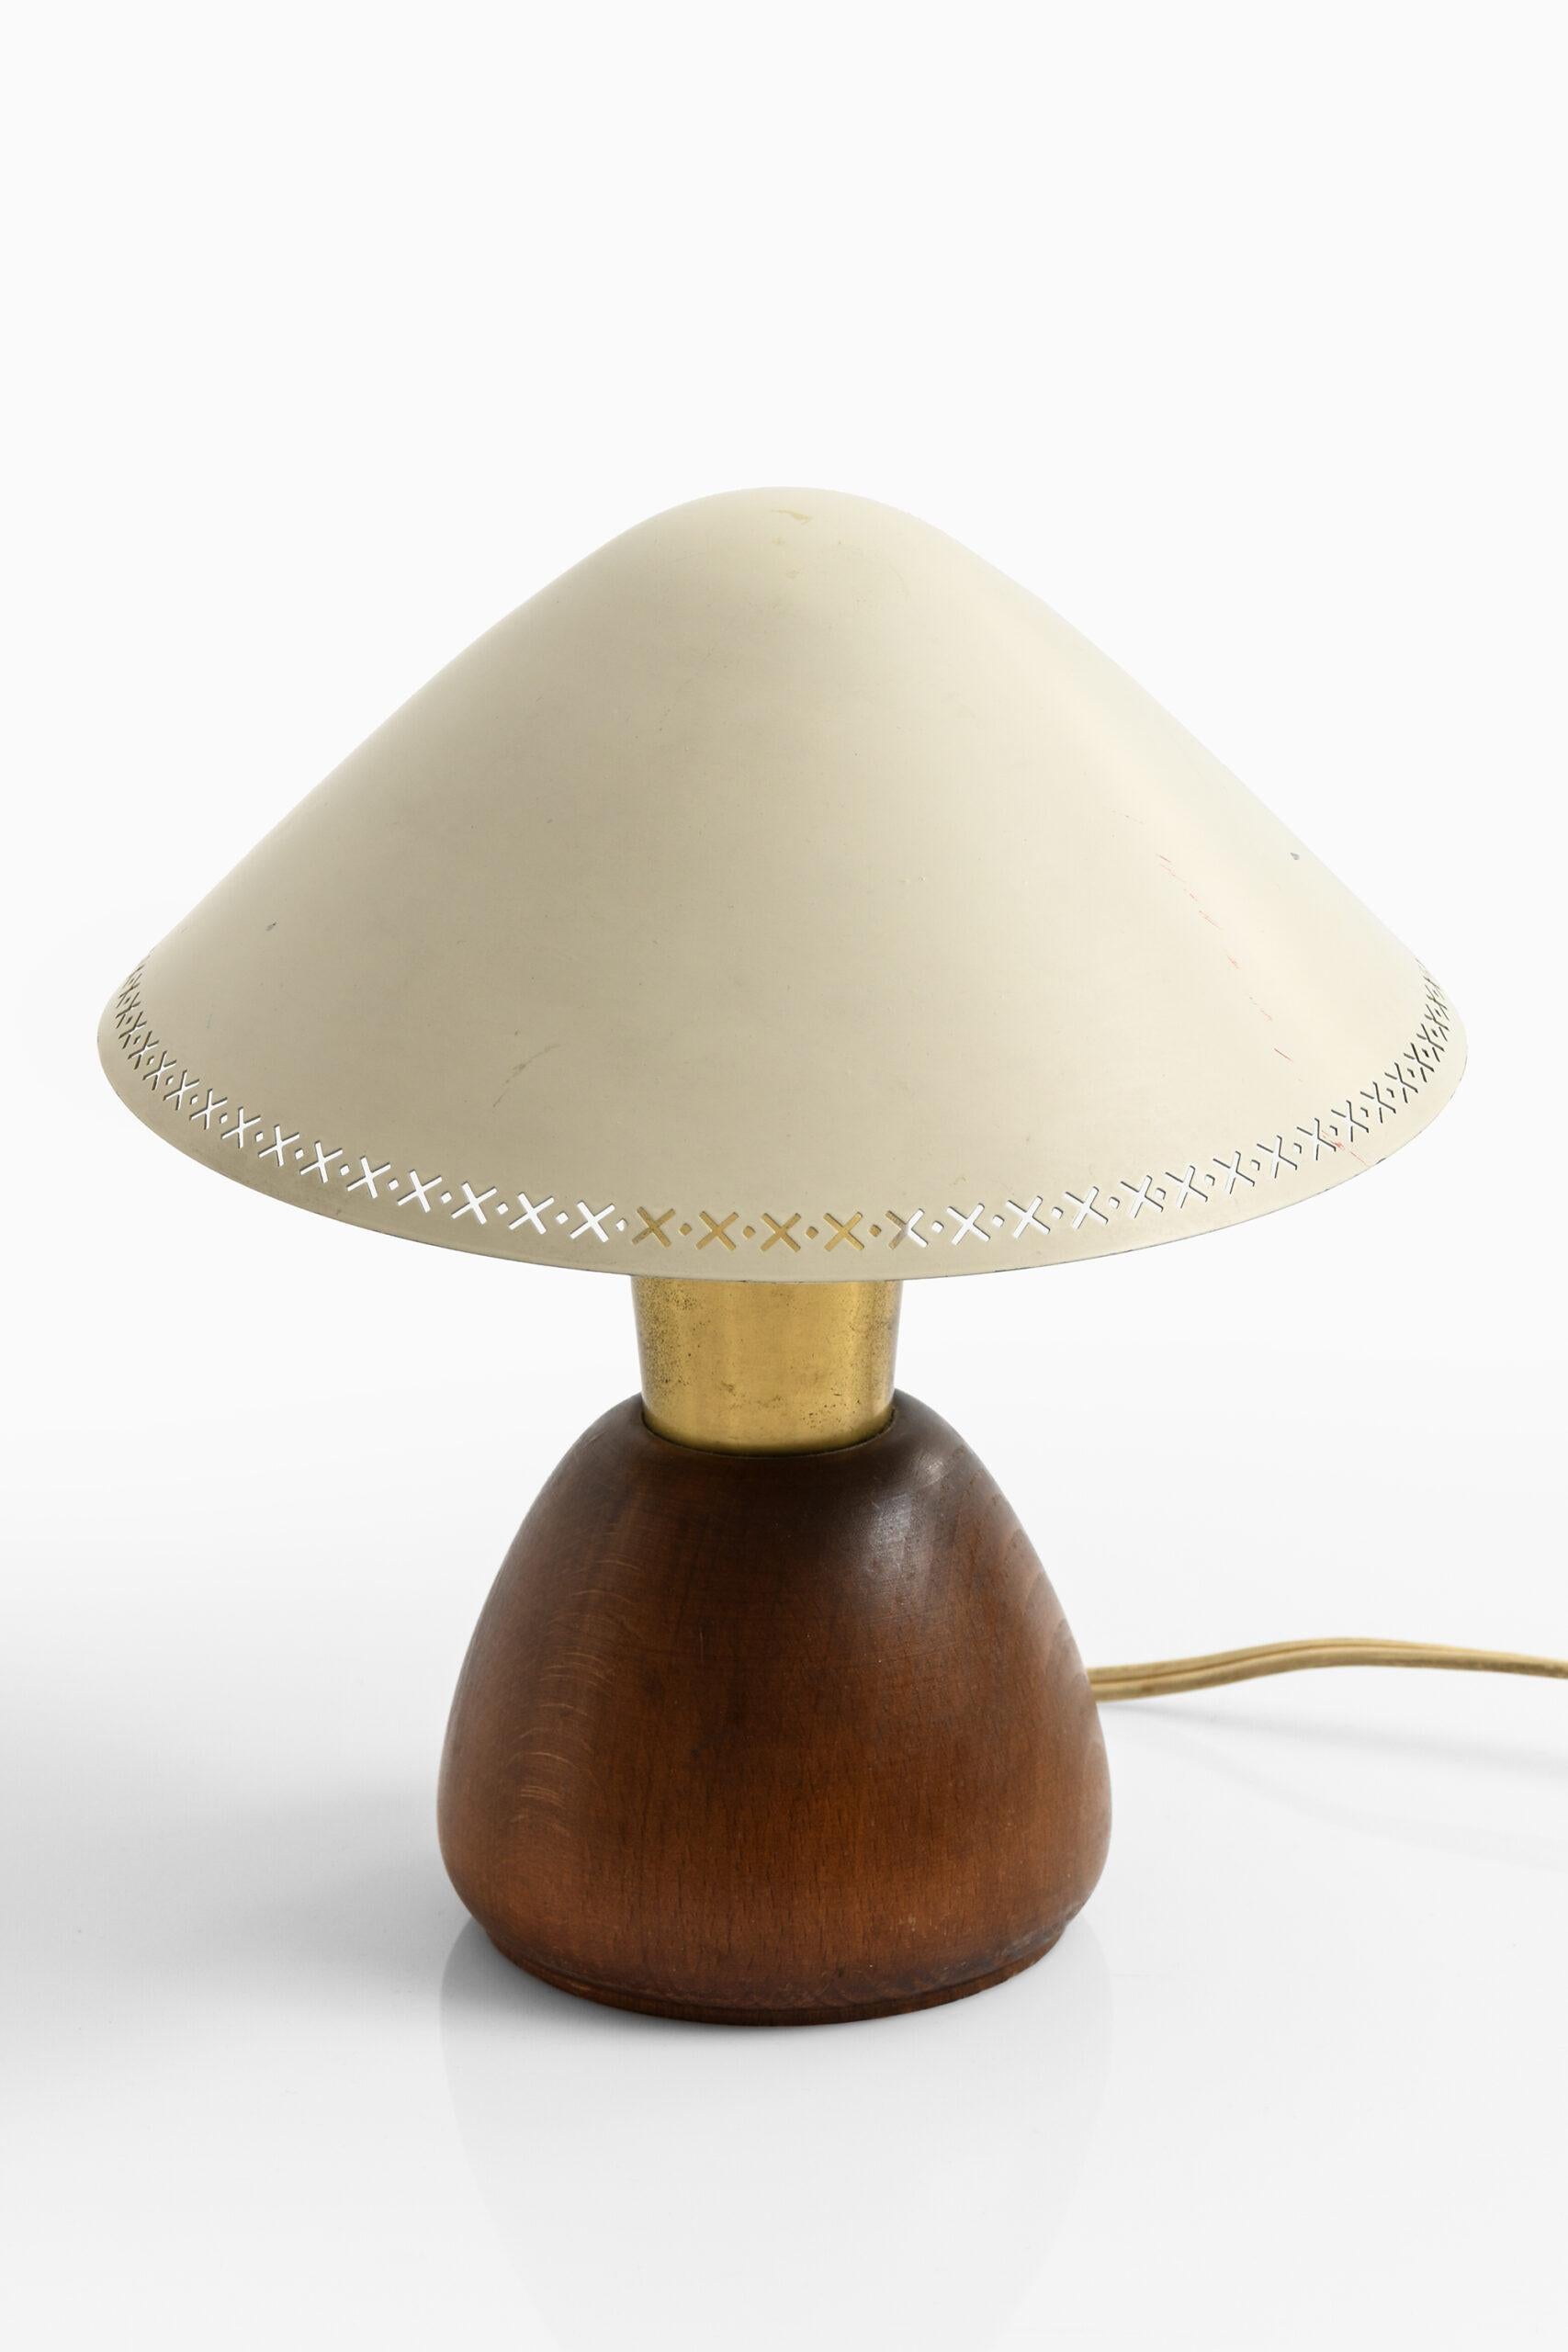 Scandinavian Modern Table Lamps Produced by ASEA in Sweden